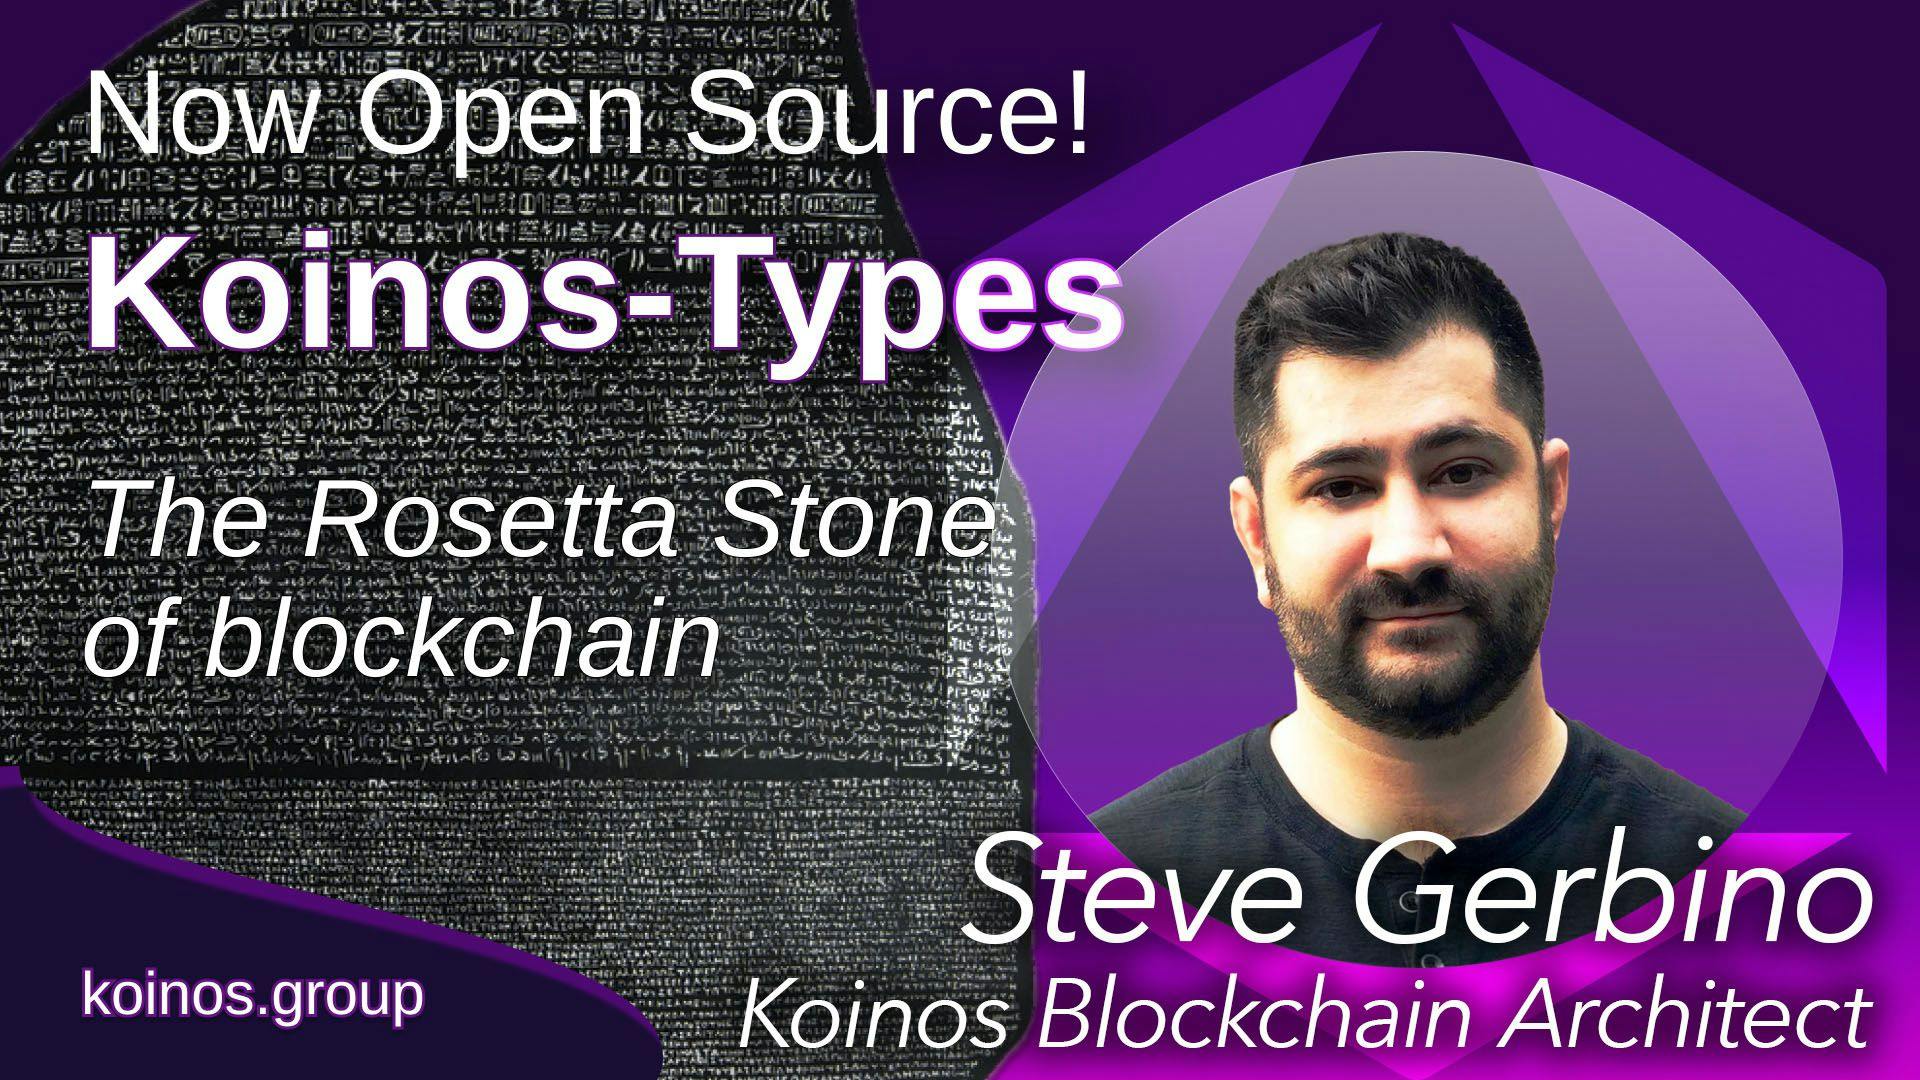 /meet-the-rosetta-stone-of-blockchain-0b1033zj feature image